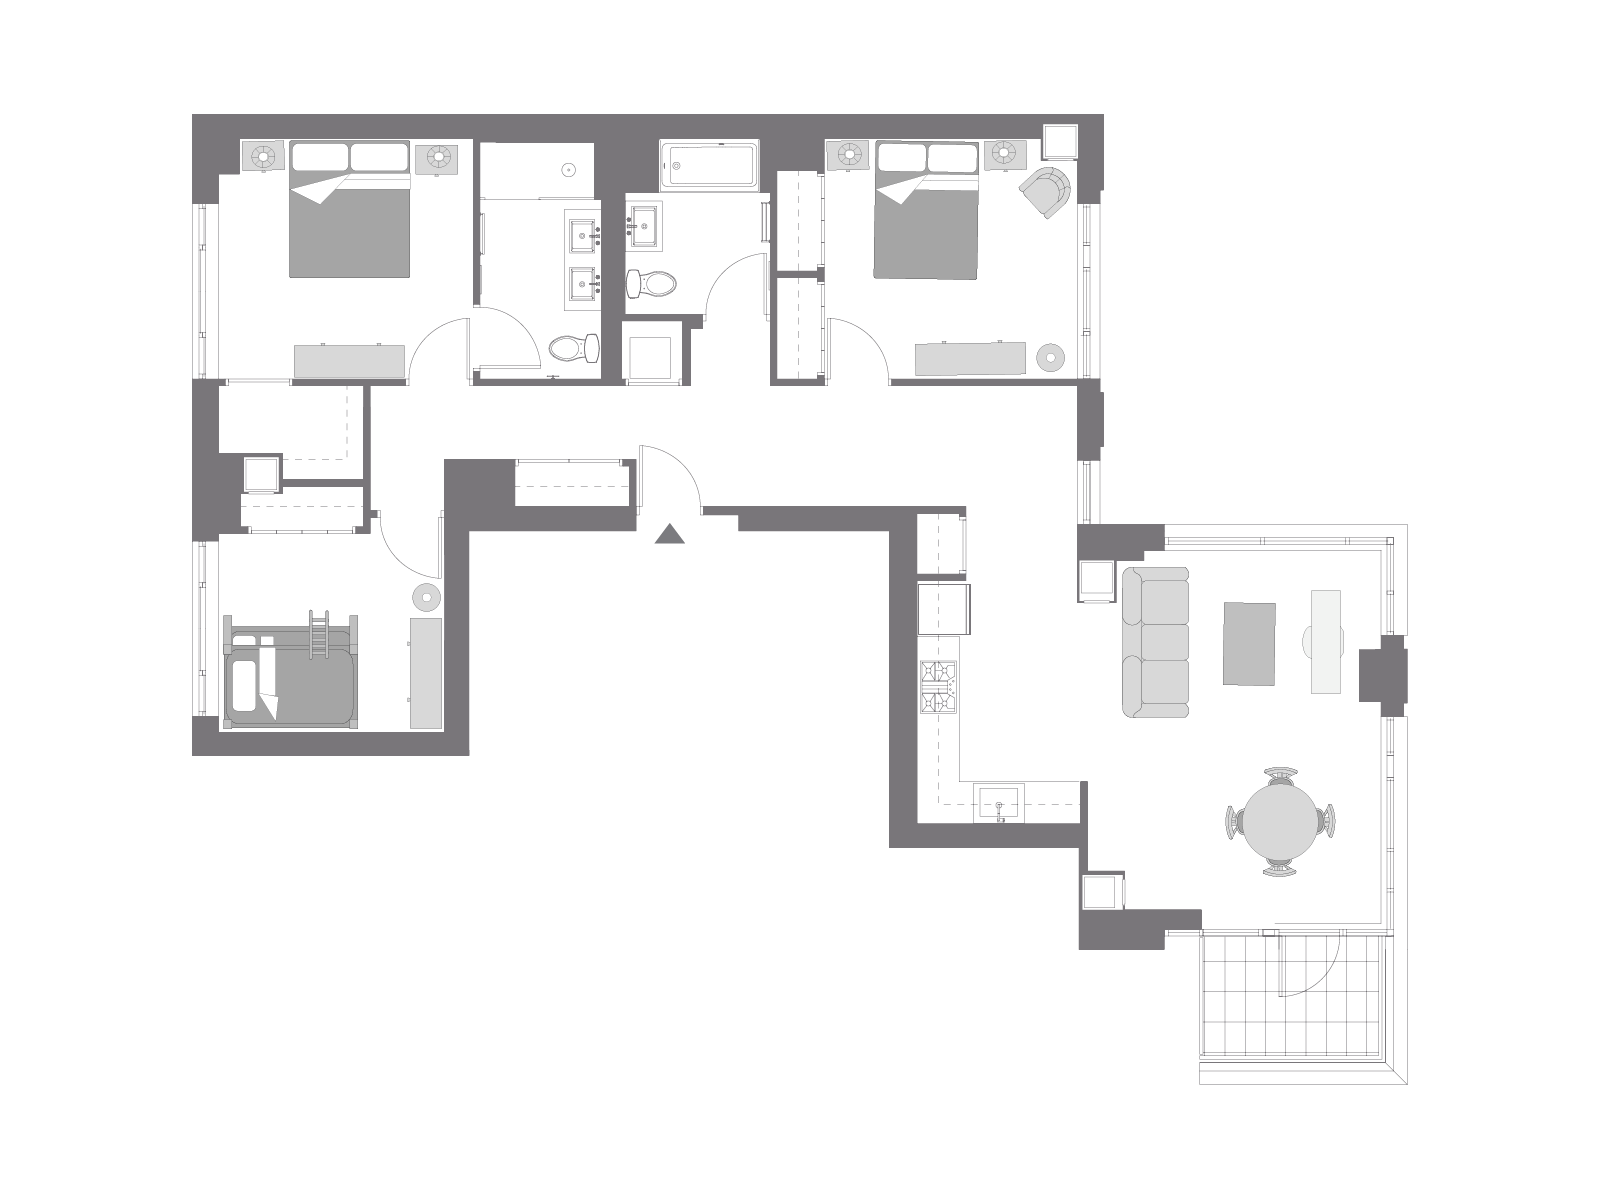 Floor plan with furniture